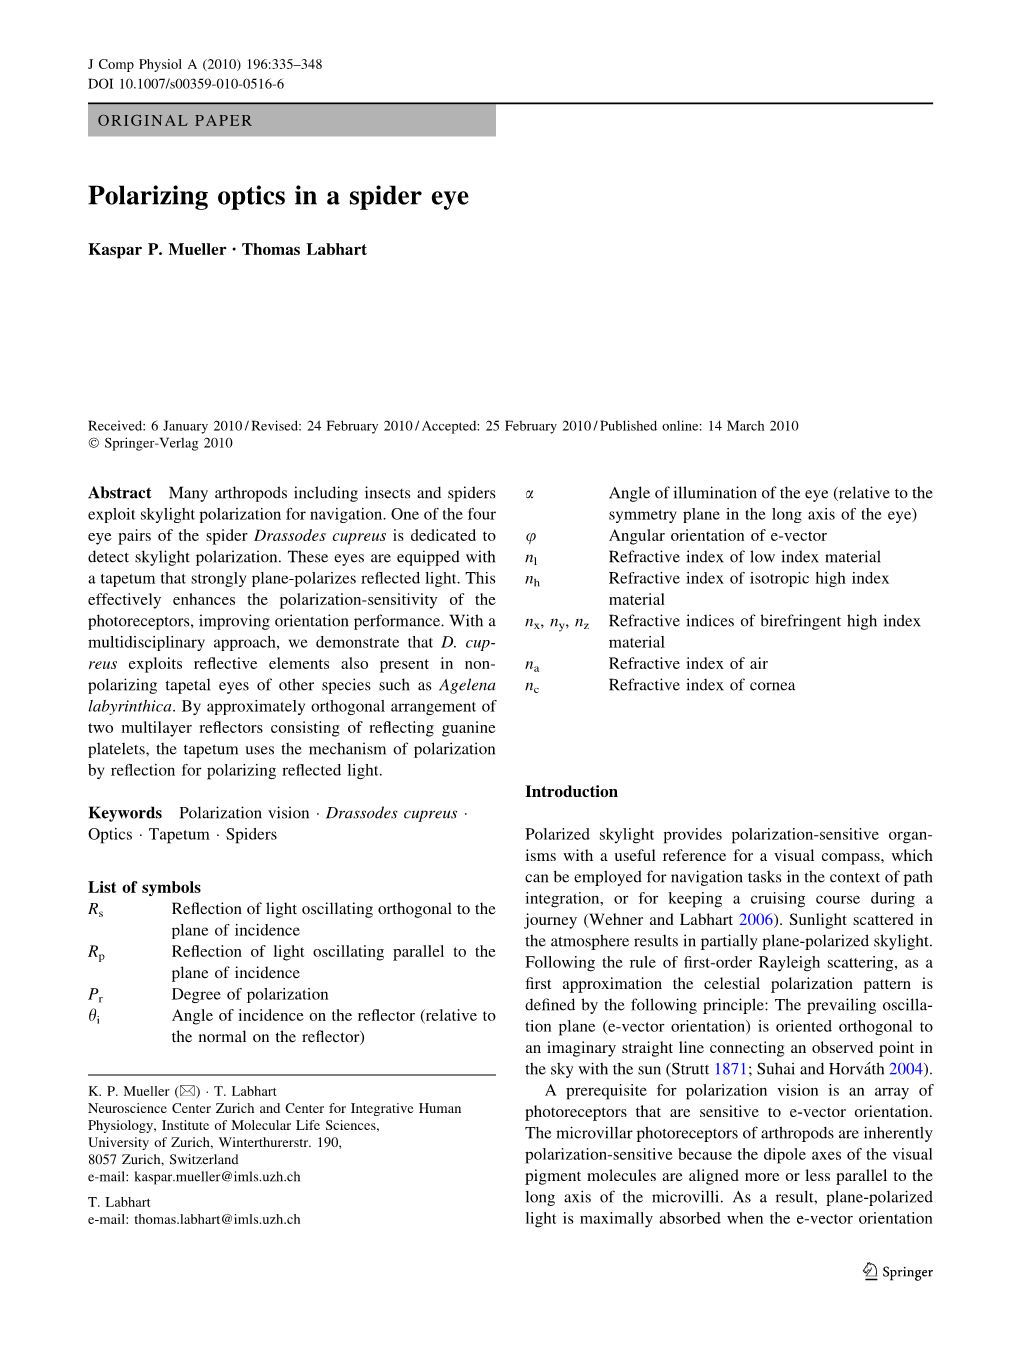 Polarizing Optics in a Spider Eye